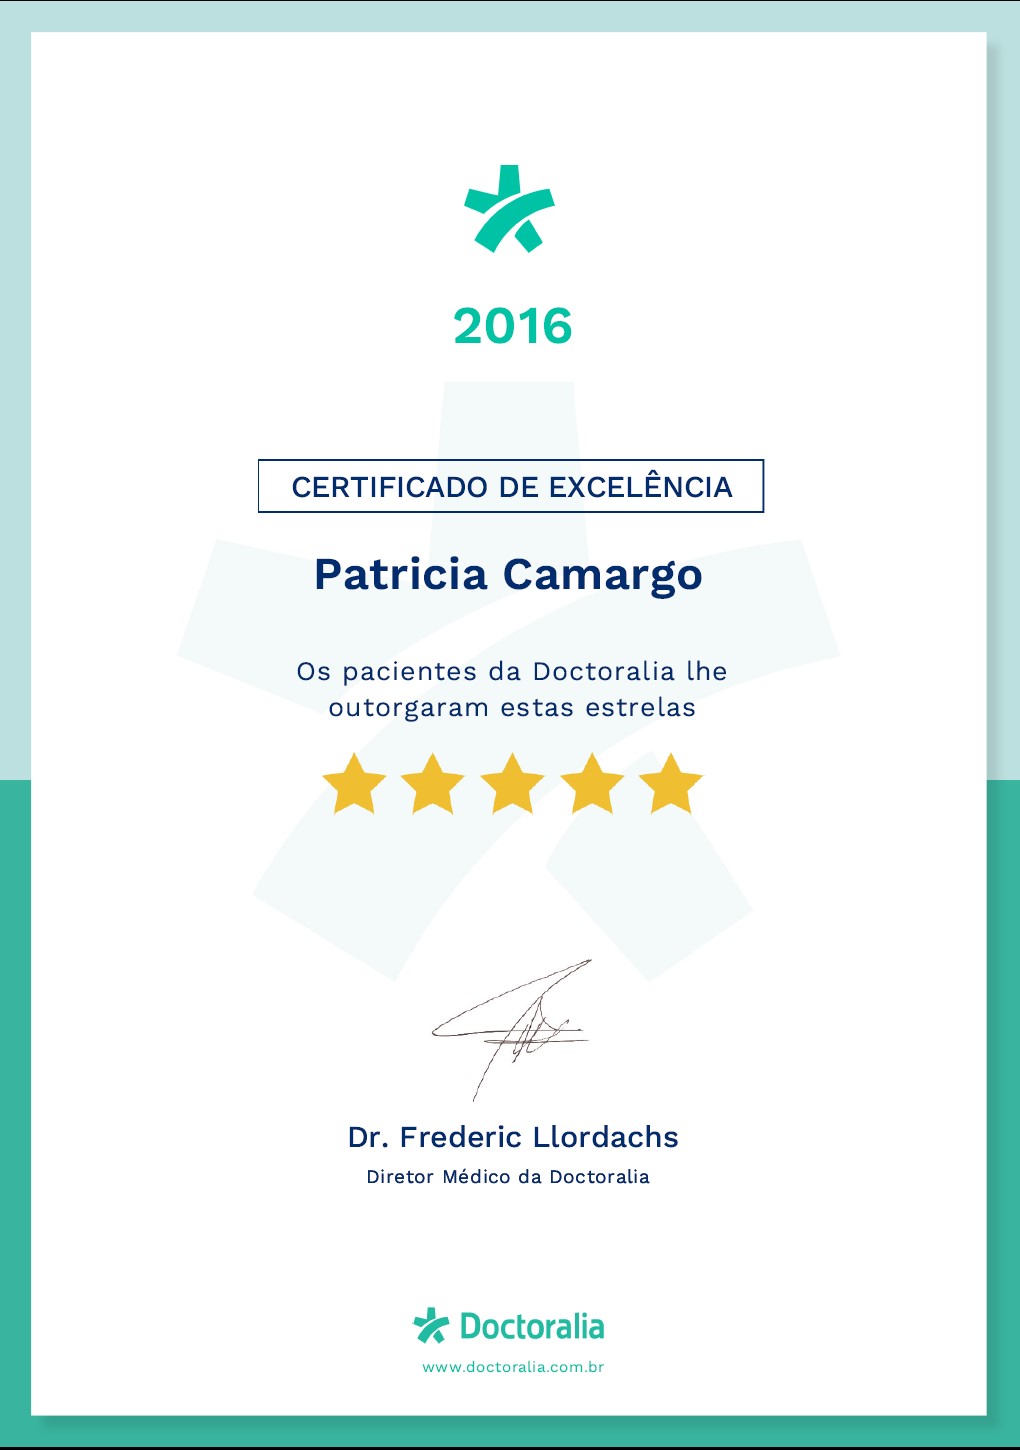 Certificado de Excelência Doctoralia 2016